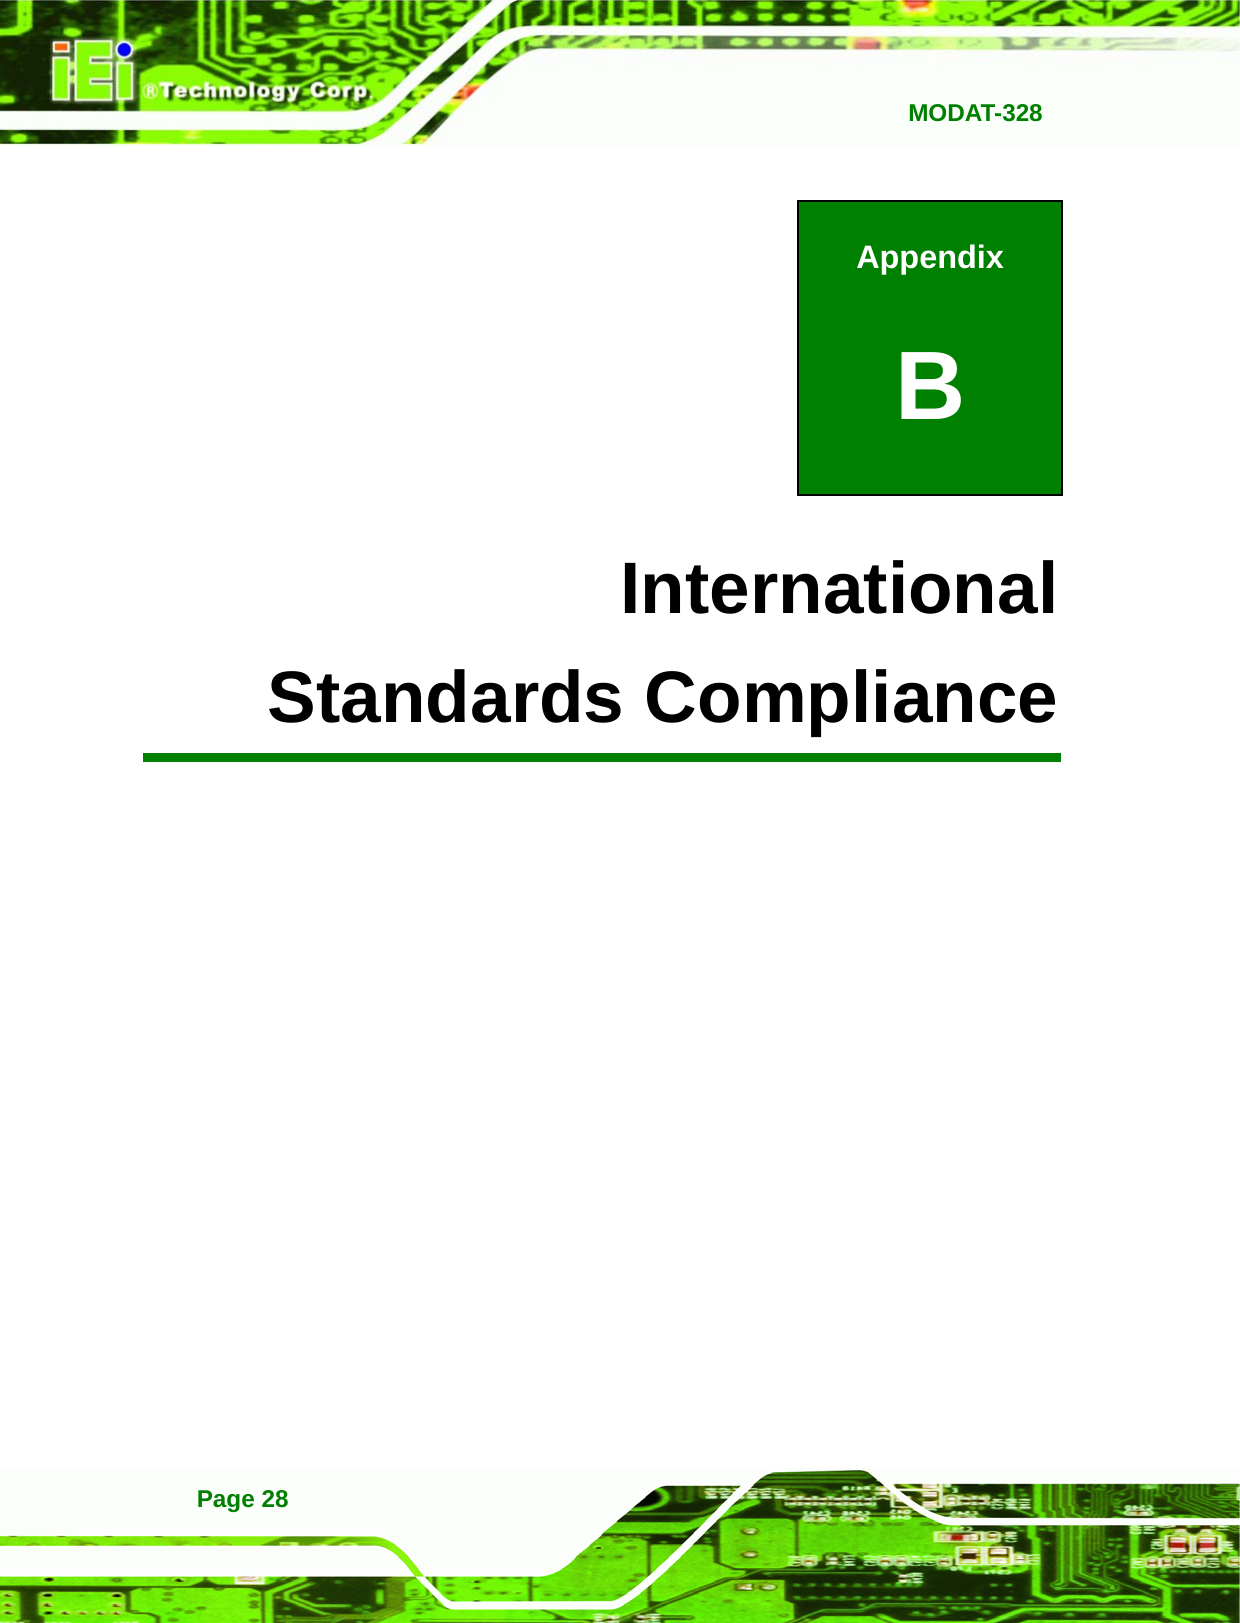   MODAT-328Page 28 Appendix B B International Standards Compliance 